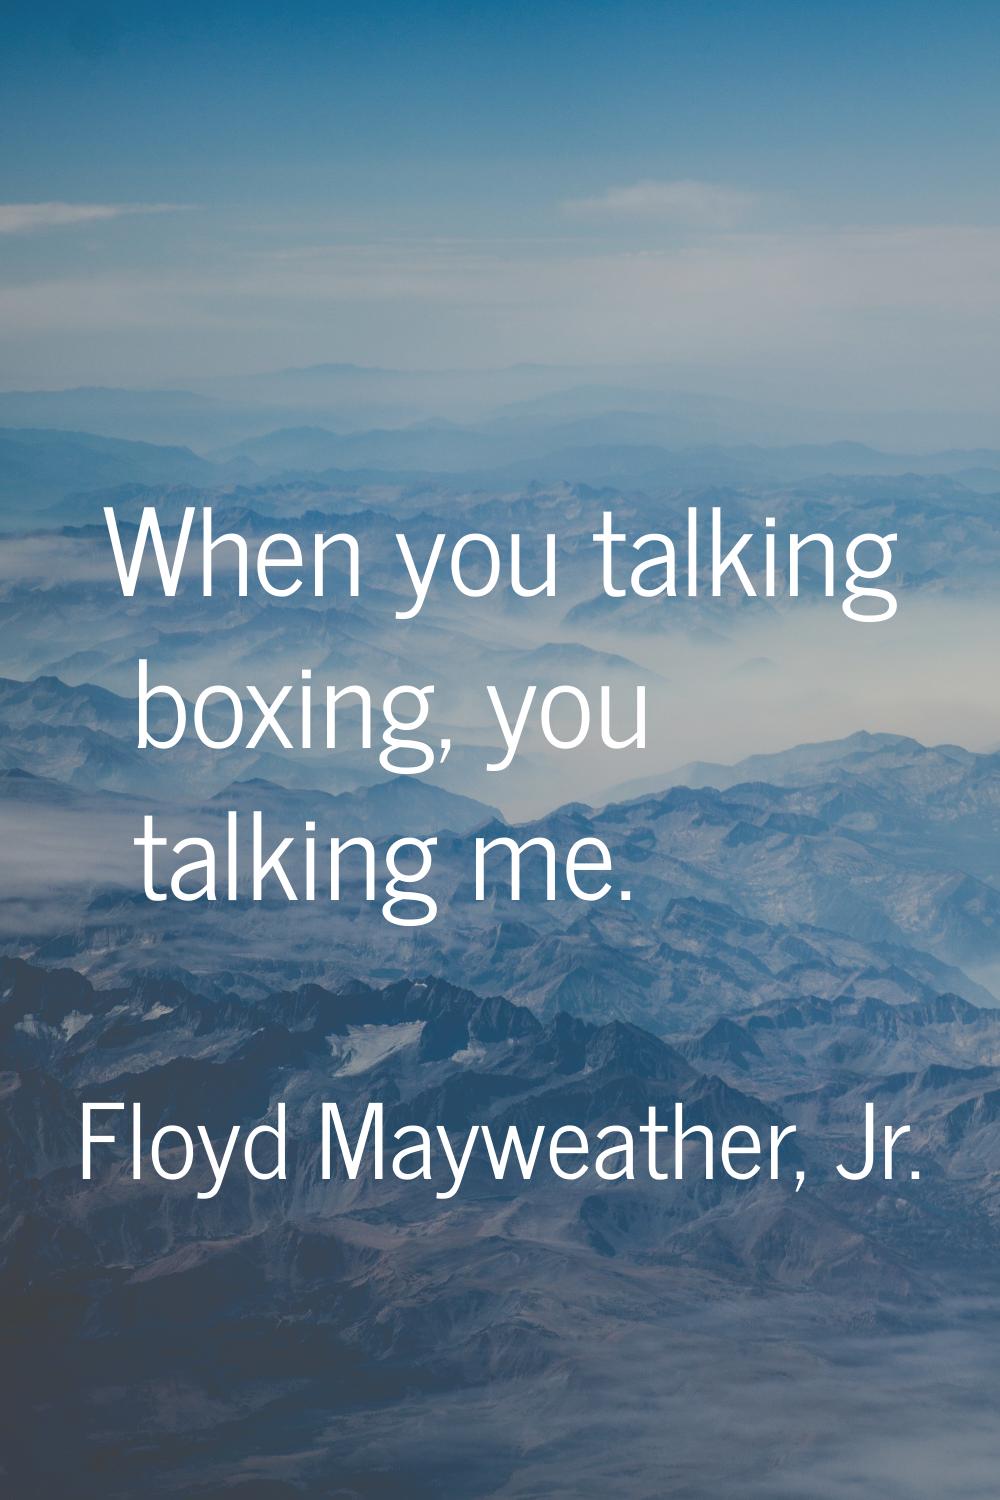 When you talking boxing, you talking me.